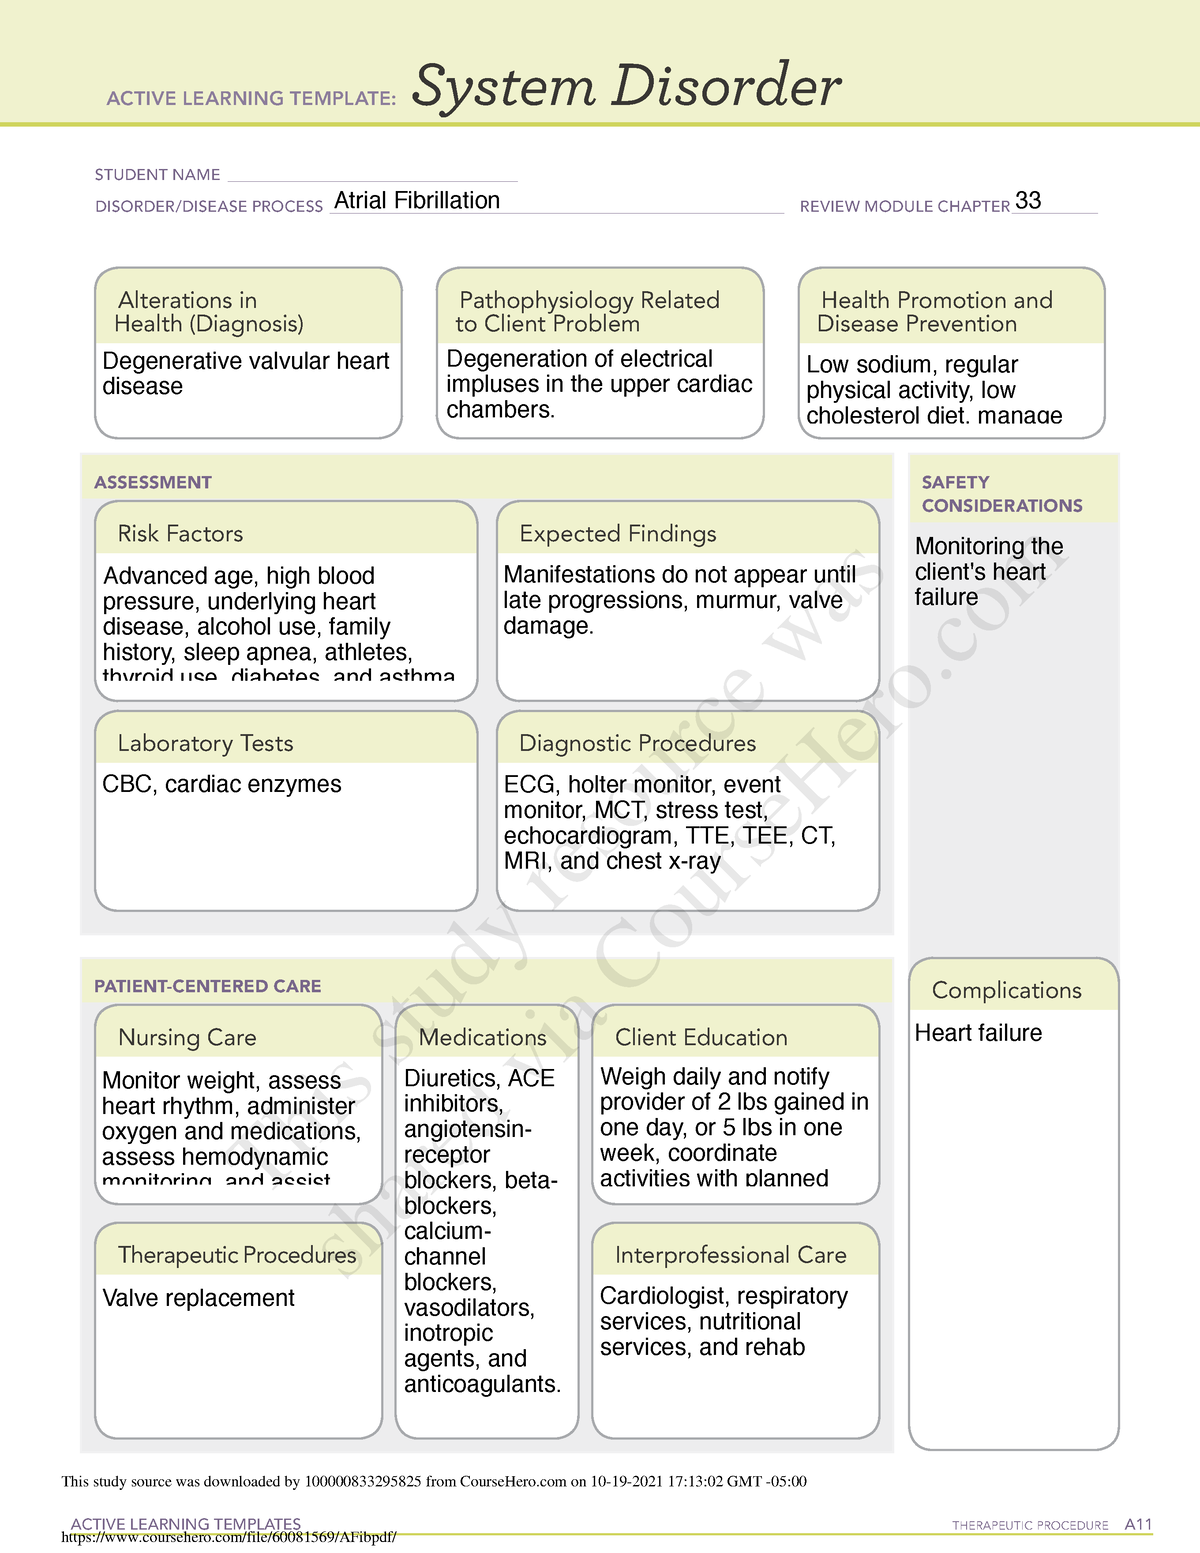 A.Fib.pdf Ati System DisorderAfib ACTIVE LEARNING TEMPLATES